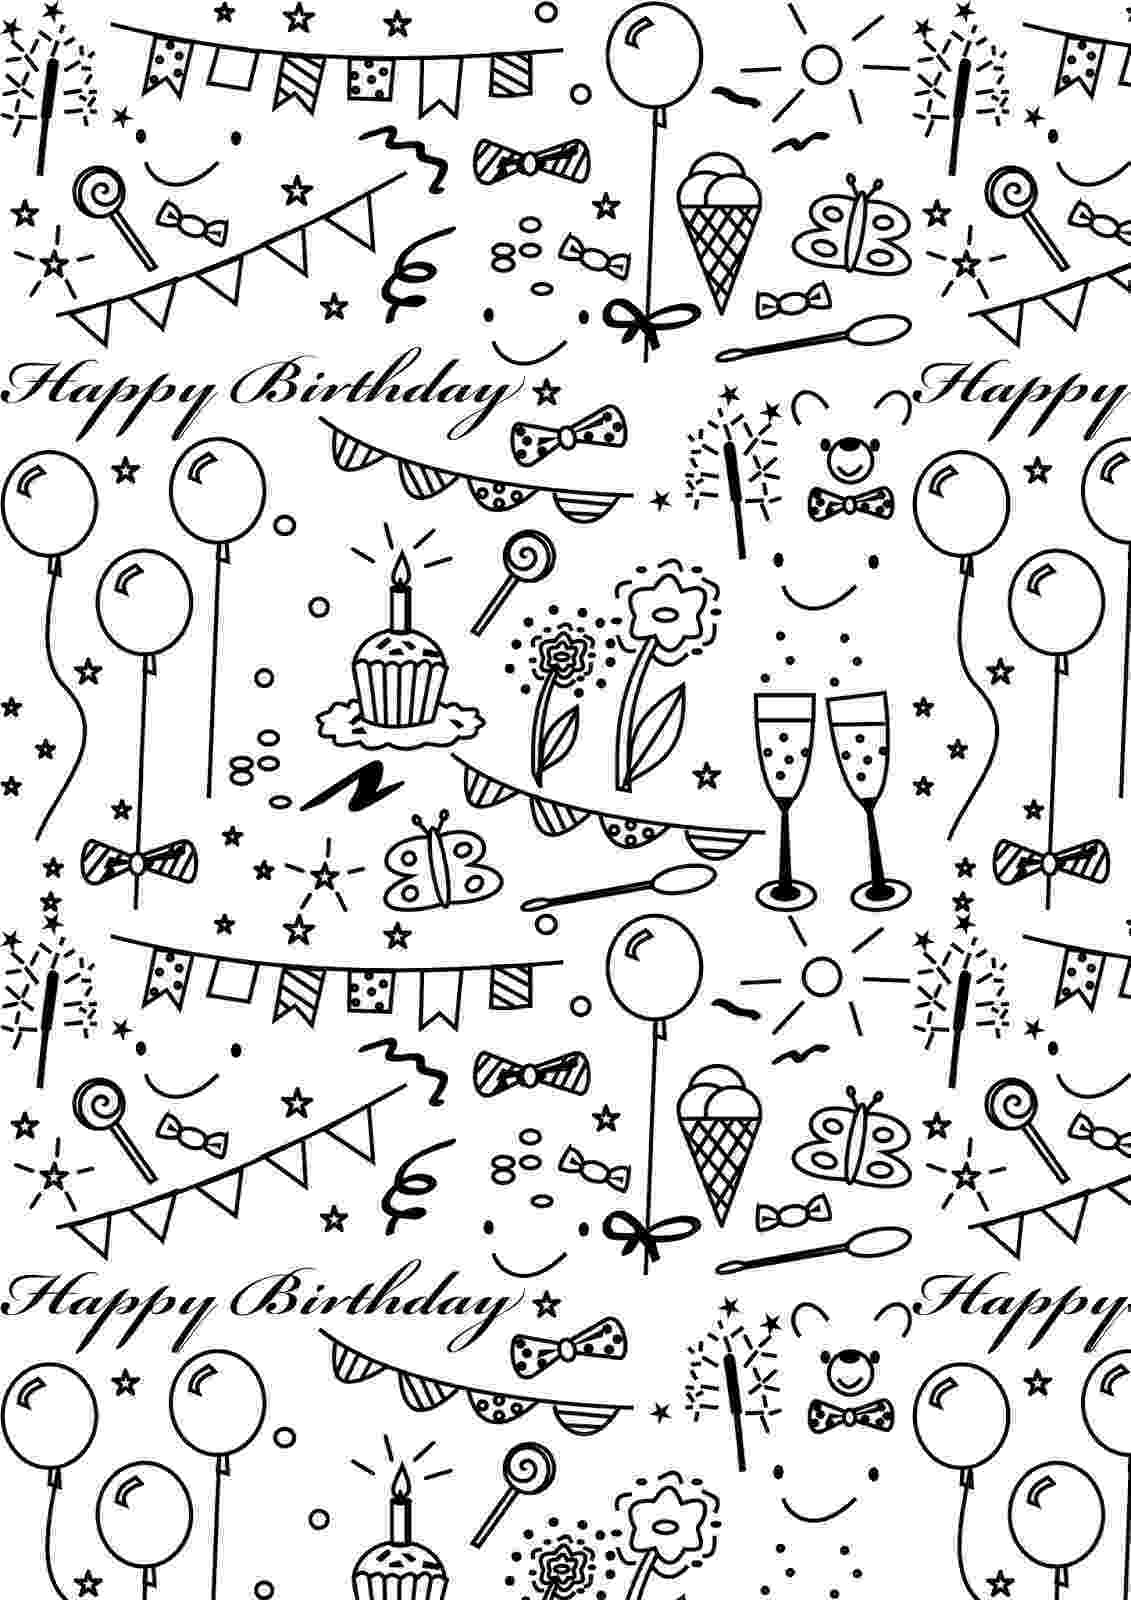 happy birthday printable pinterest the worlds catalog of ideas birthday happy printable 